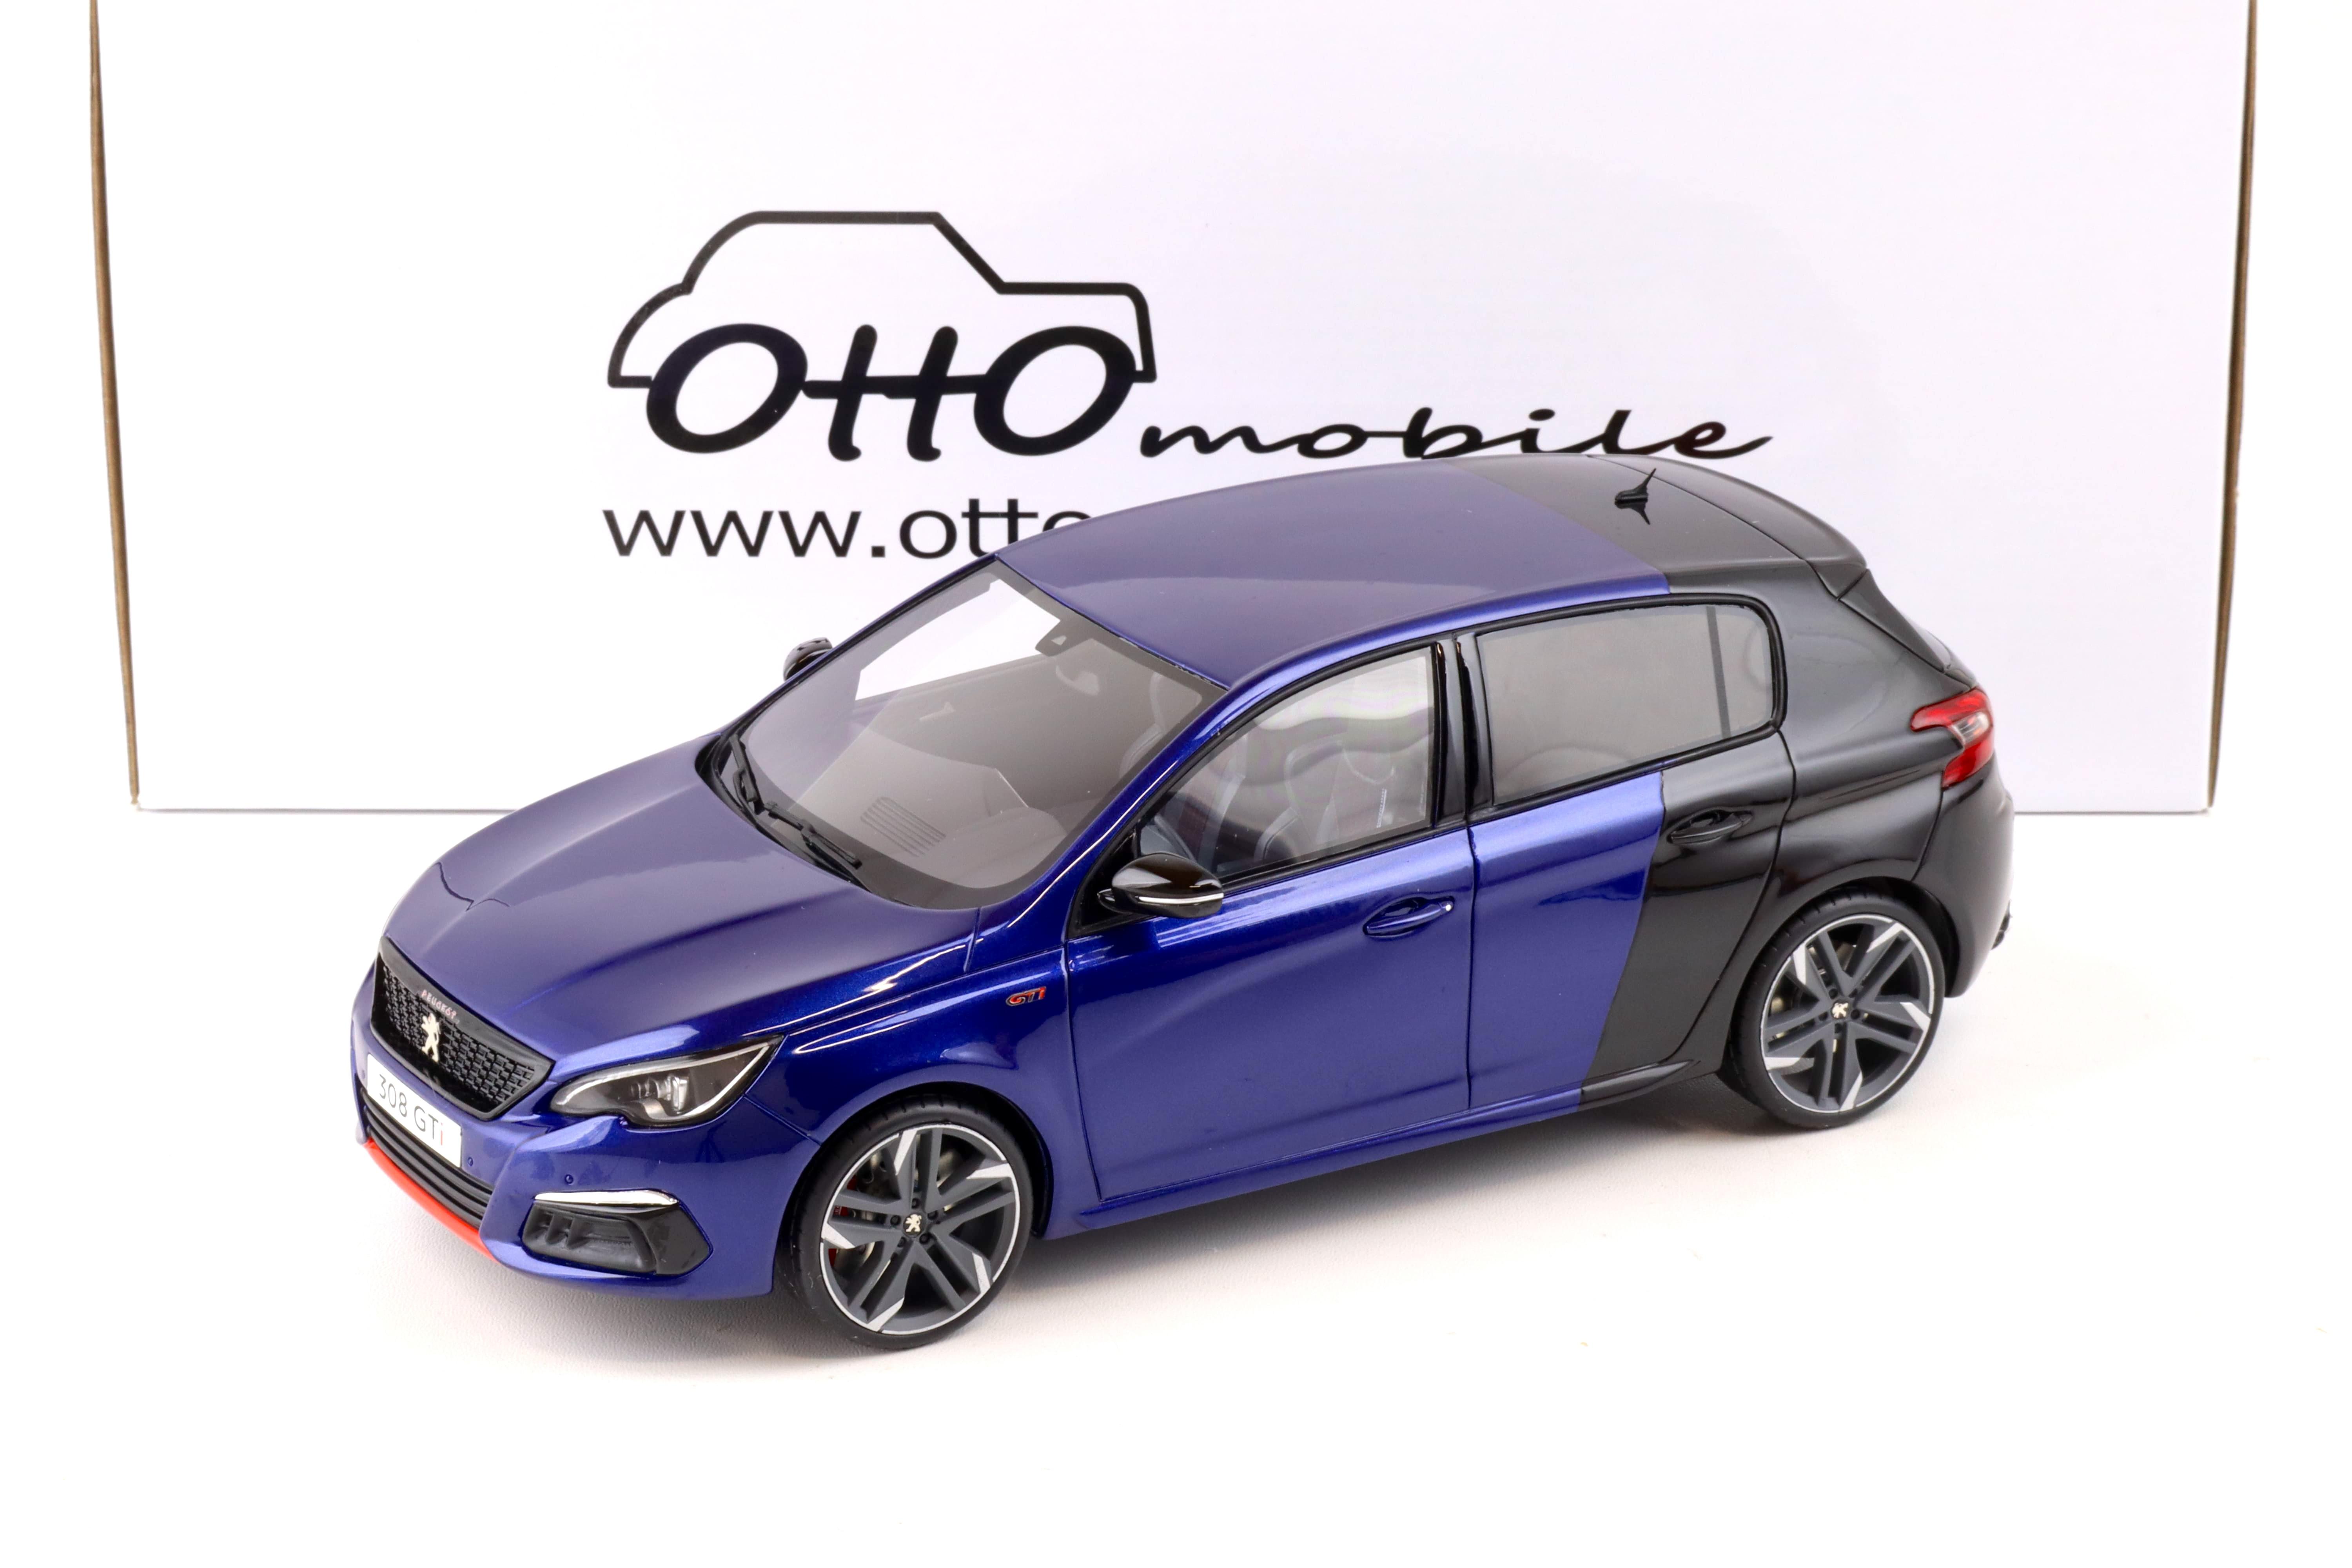 1:18 OTTO mobile OT922 Peugeot 308 GTI dark blue/ black 2018